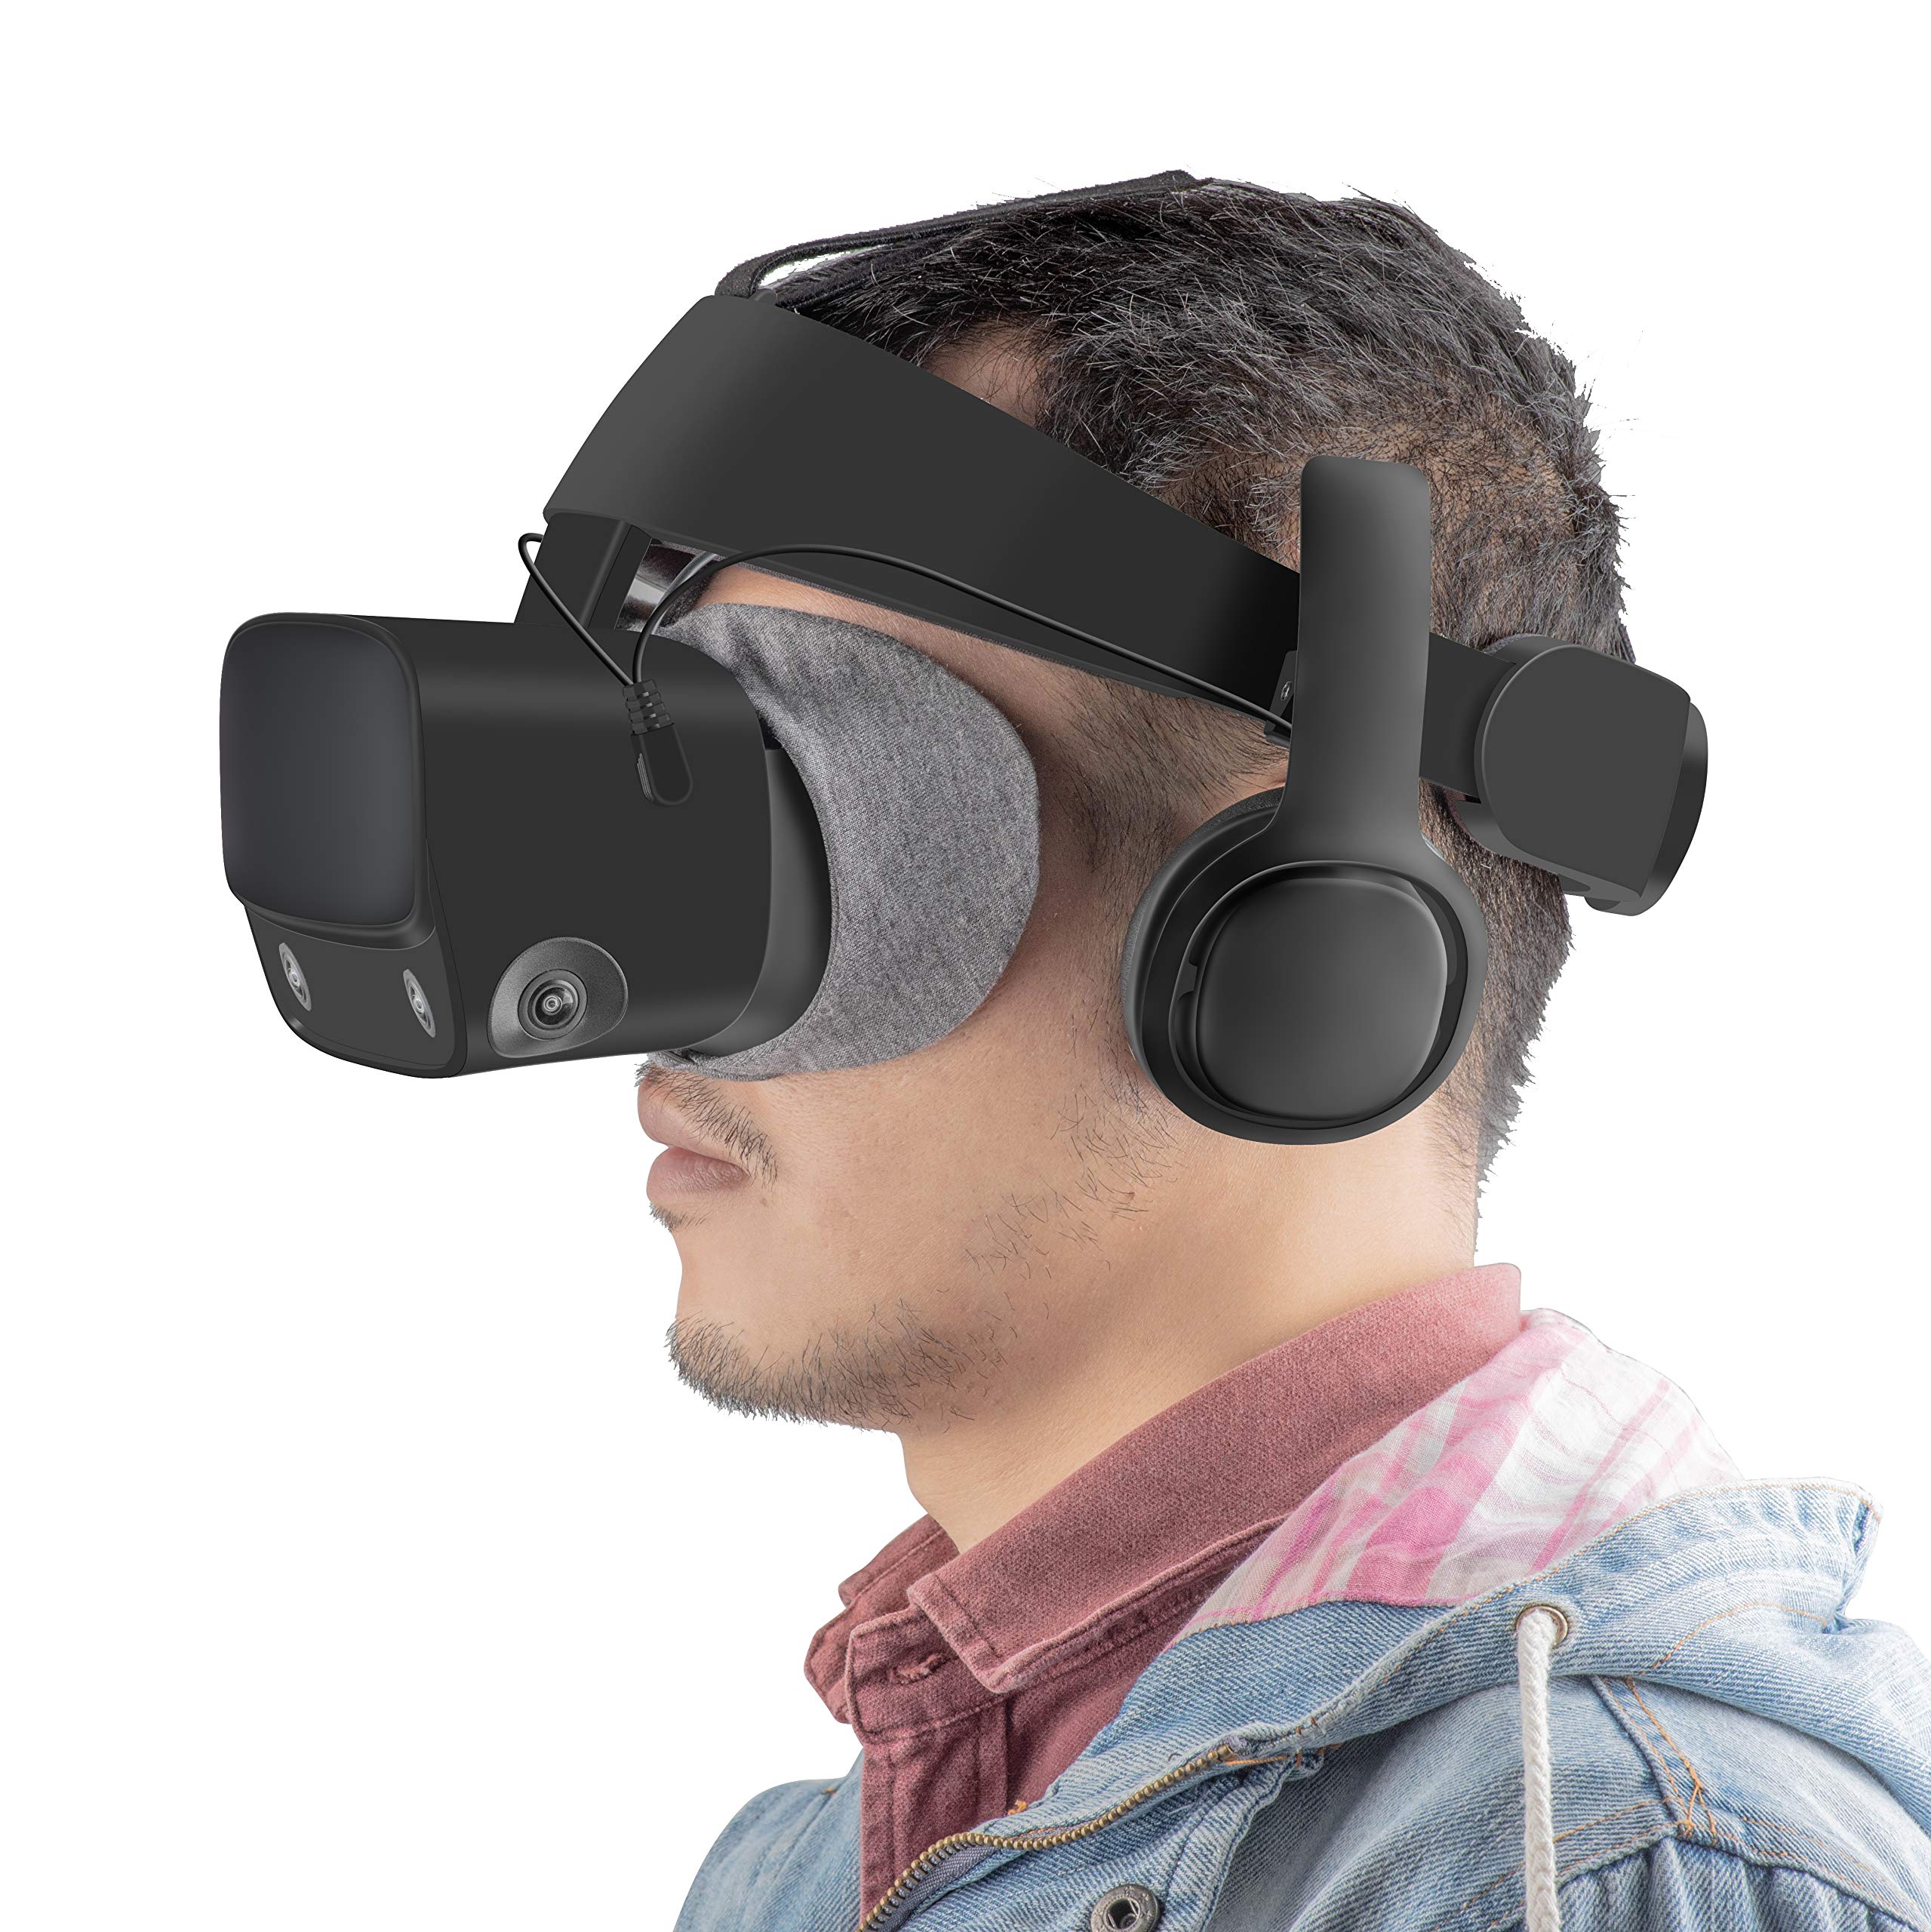 Custome-made Oculus Rift S earphones